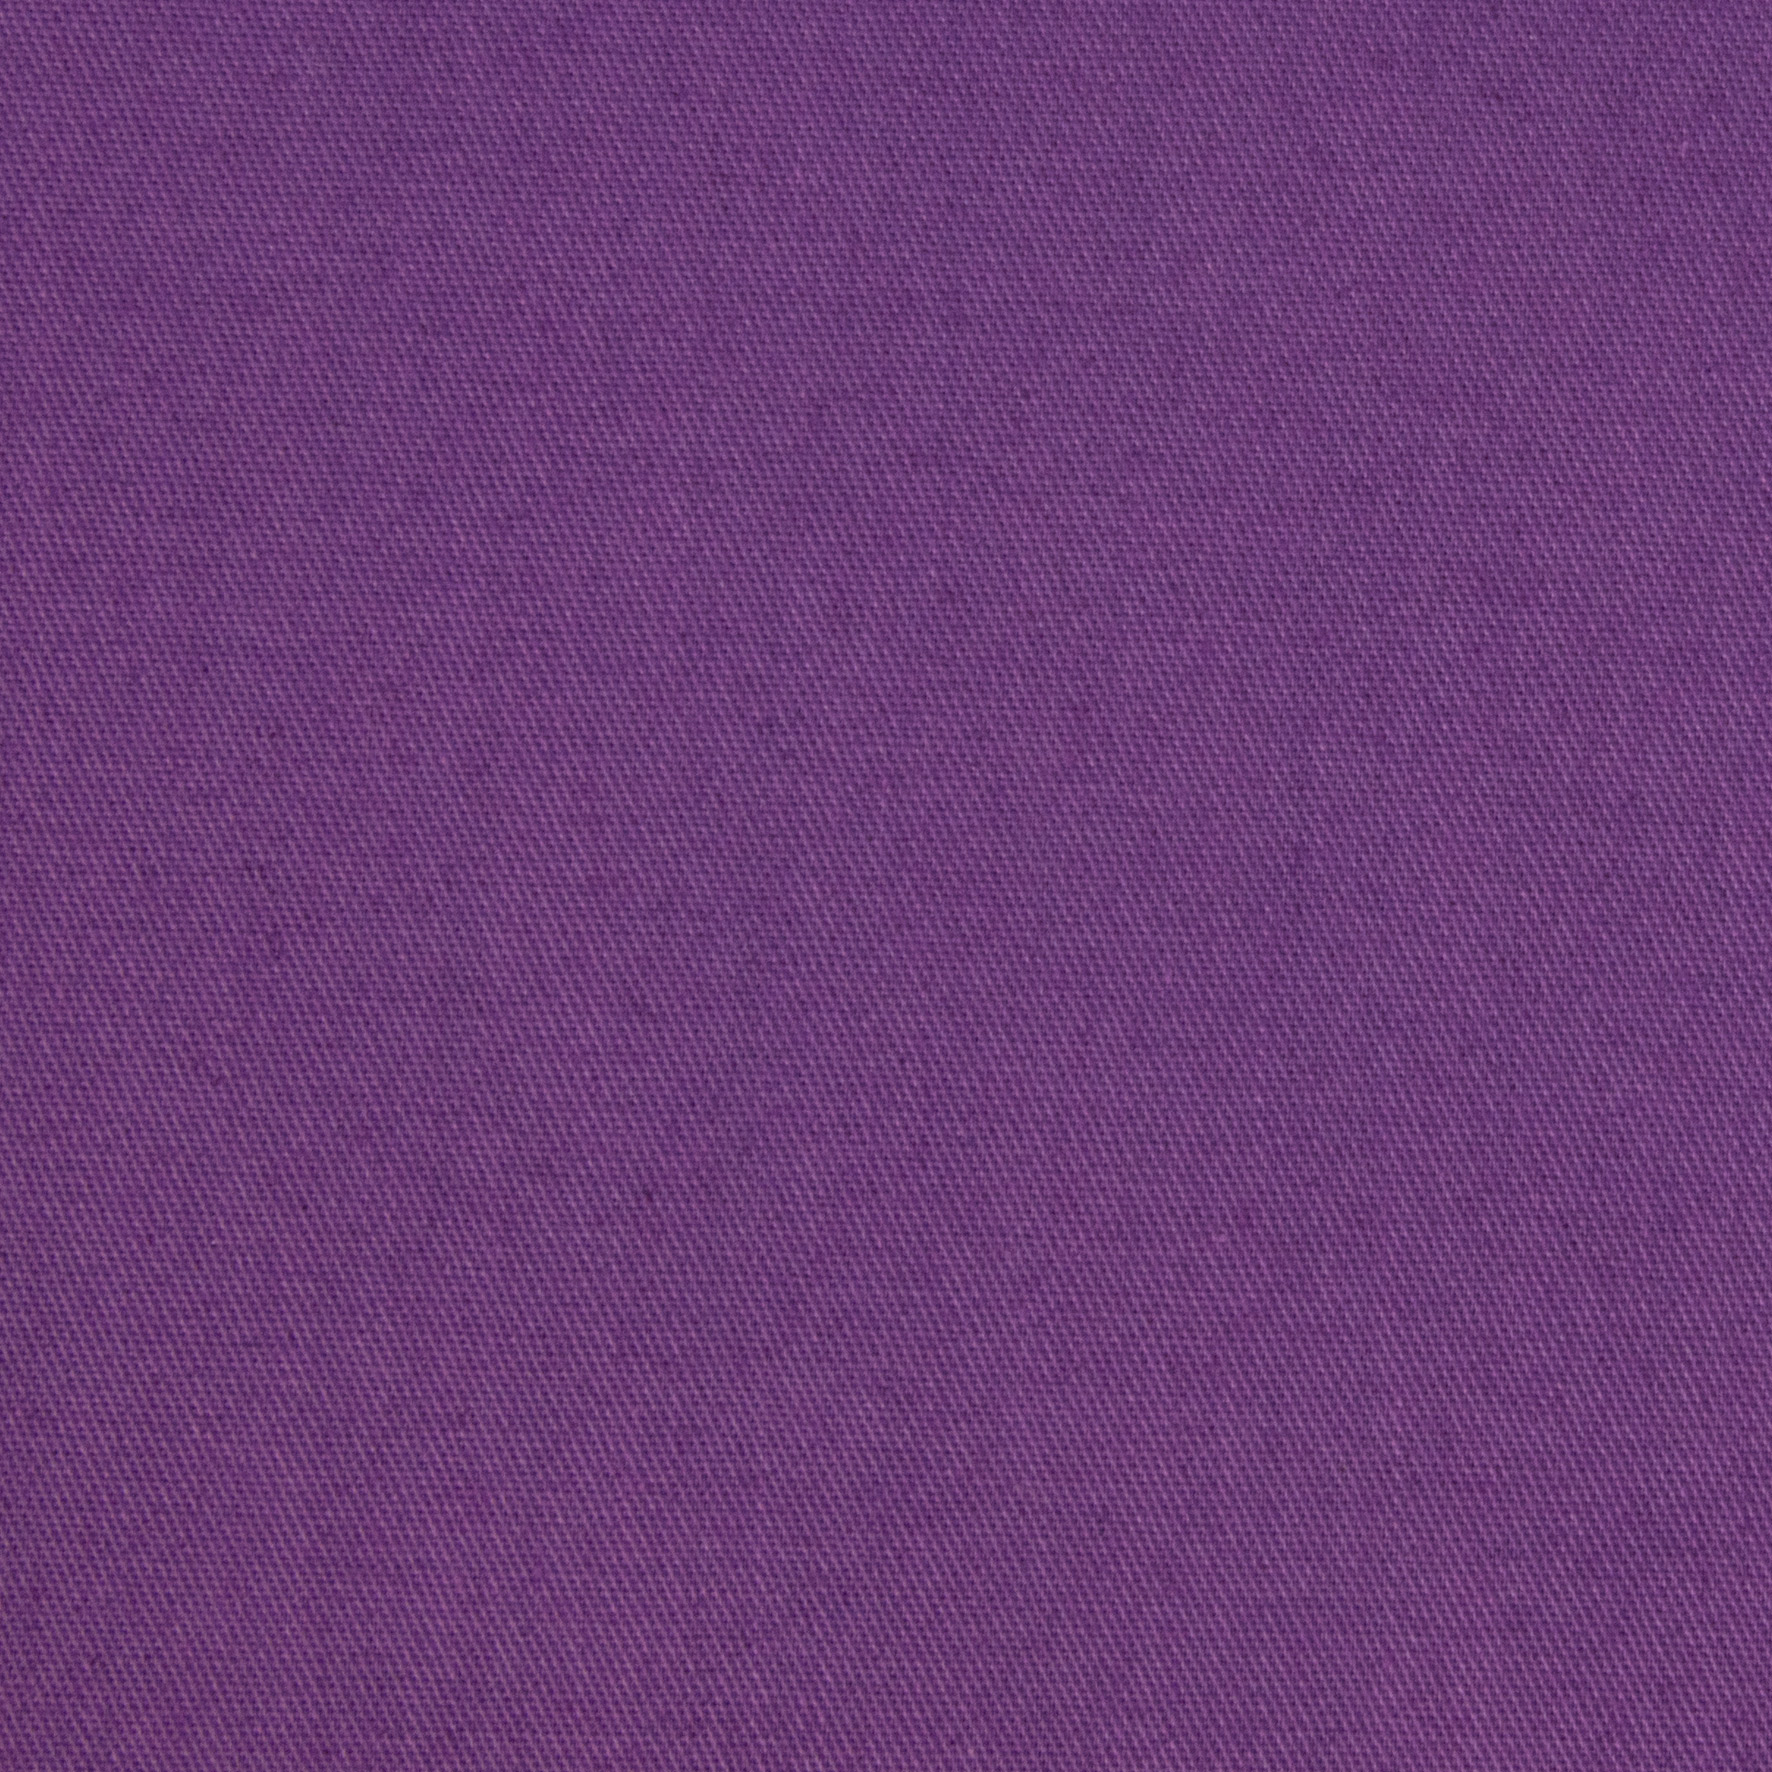 Buy tailor made shirts online - Twickenham - Purple